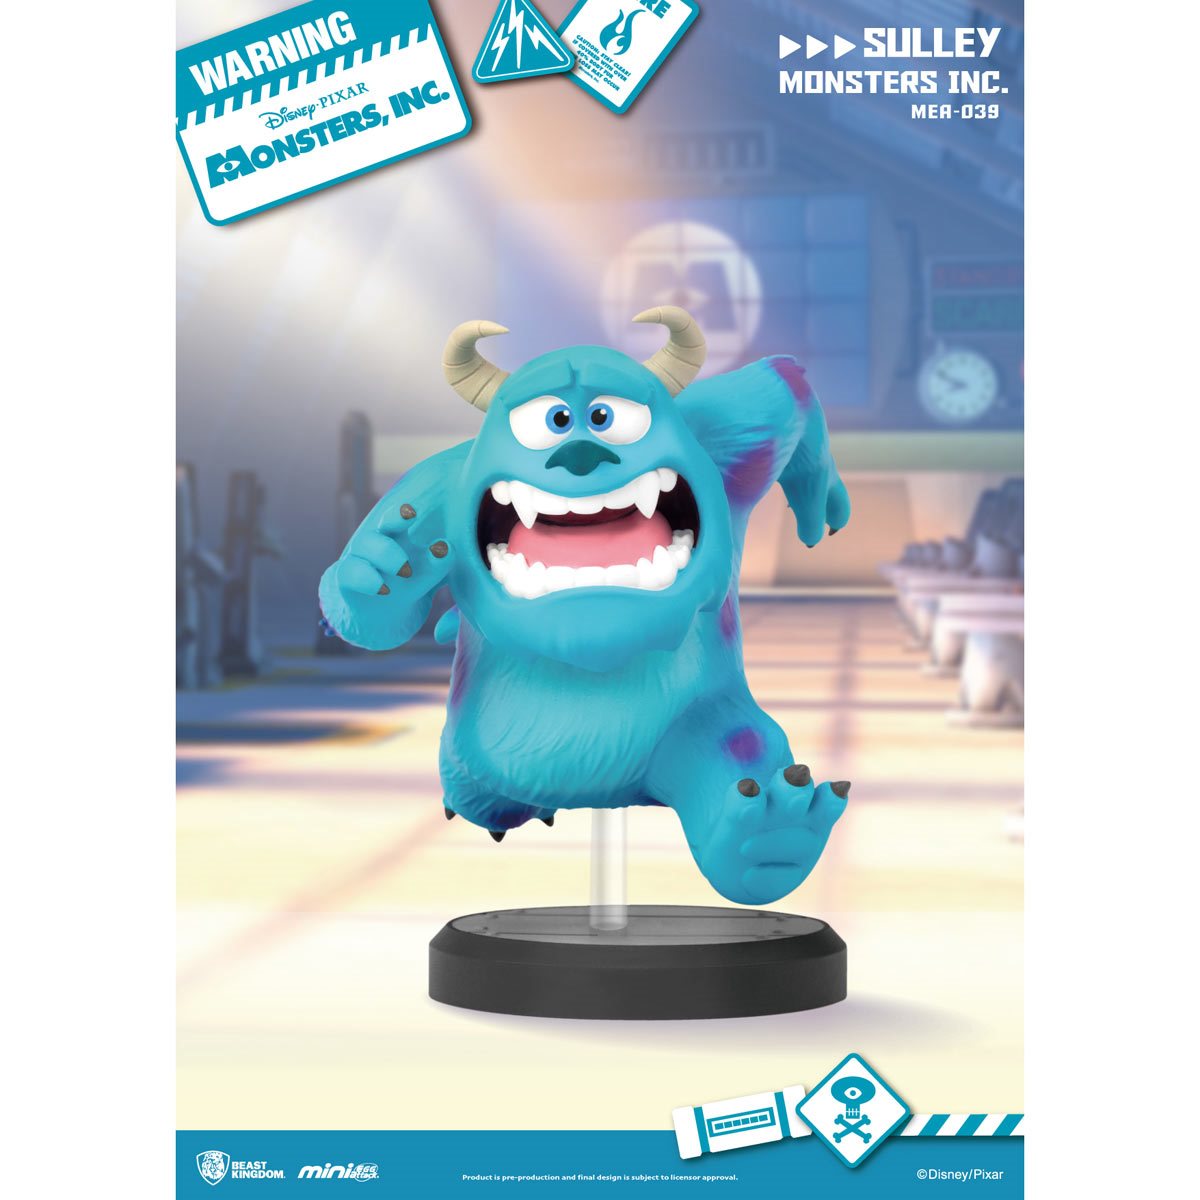 Loungefly Disney Pixar Monsters, Inc Doors Mini Backpack Sulley Mike Boo  Randall